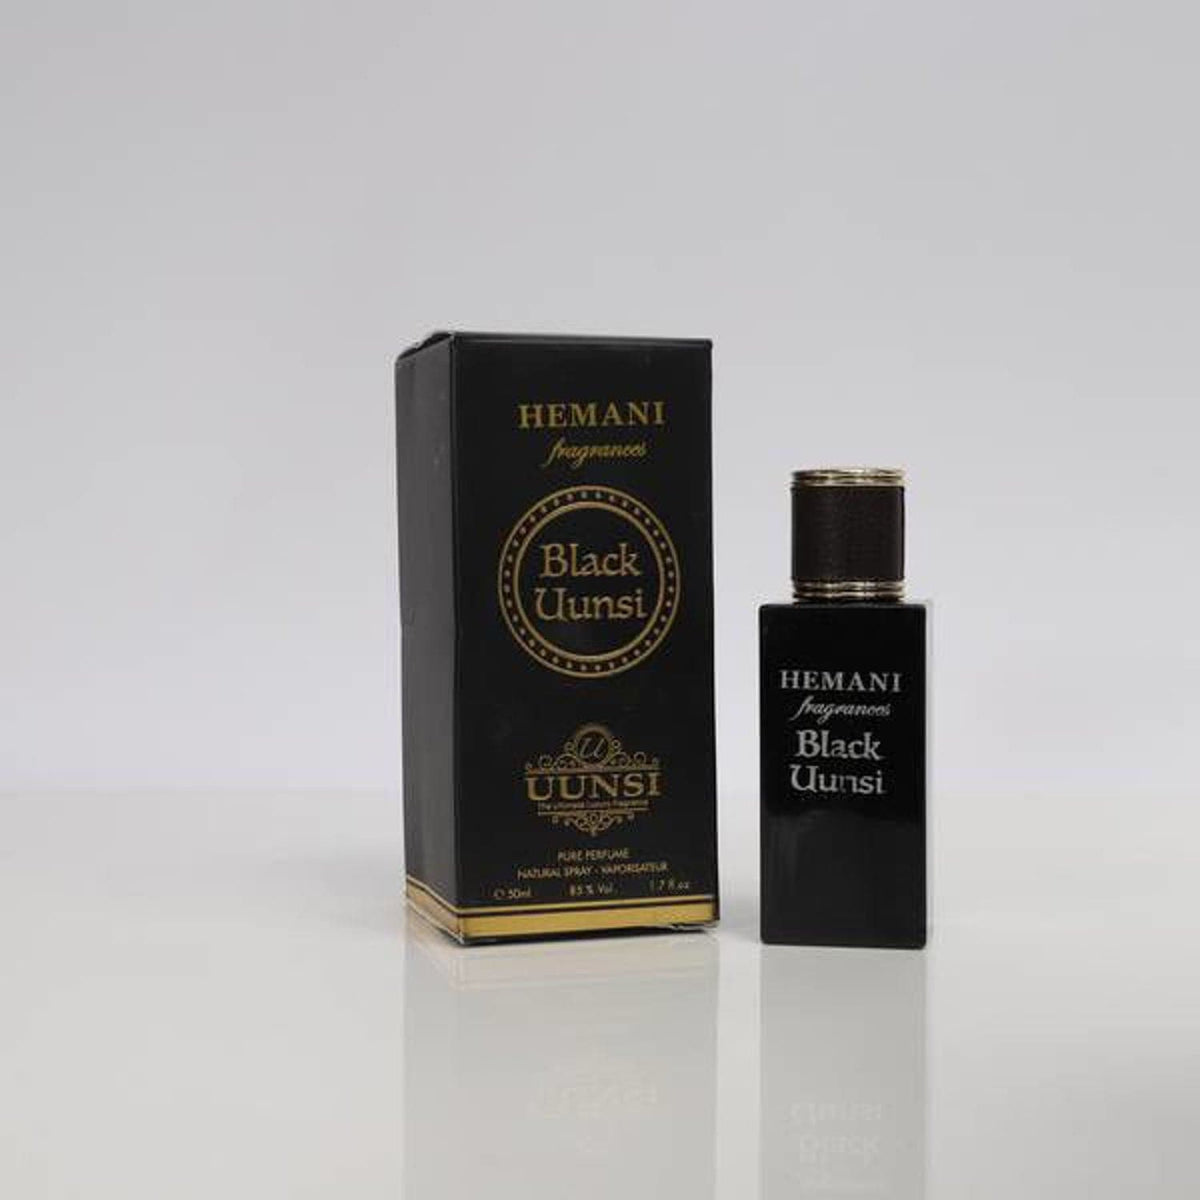 Hemani Black Uunsi Perfume 50Ml - Premium  from Hemani - Just Rs 700.00! Shop now at Cozmetica